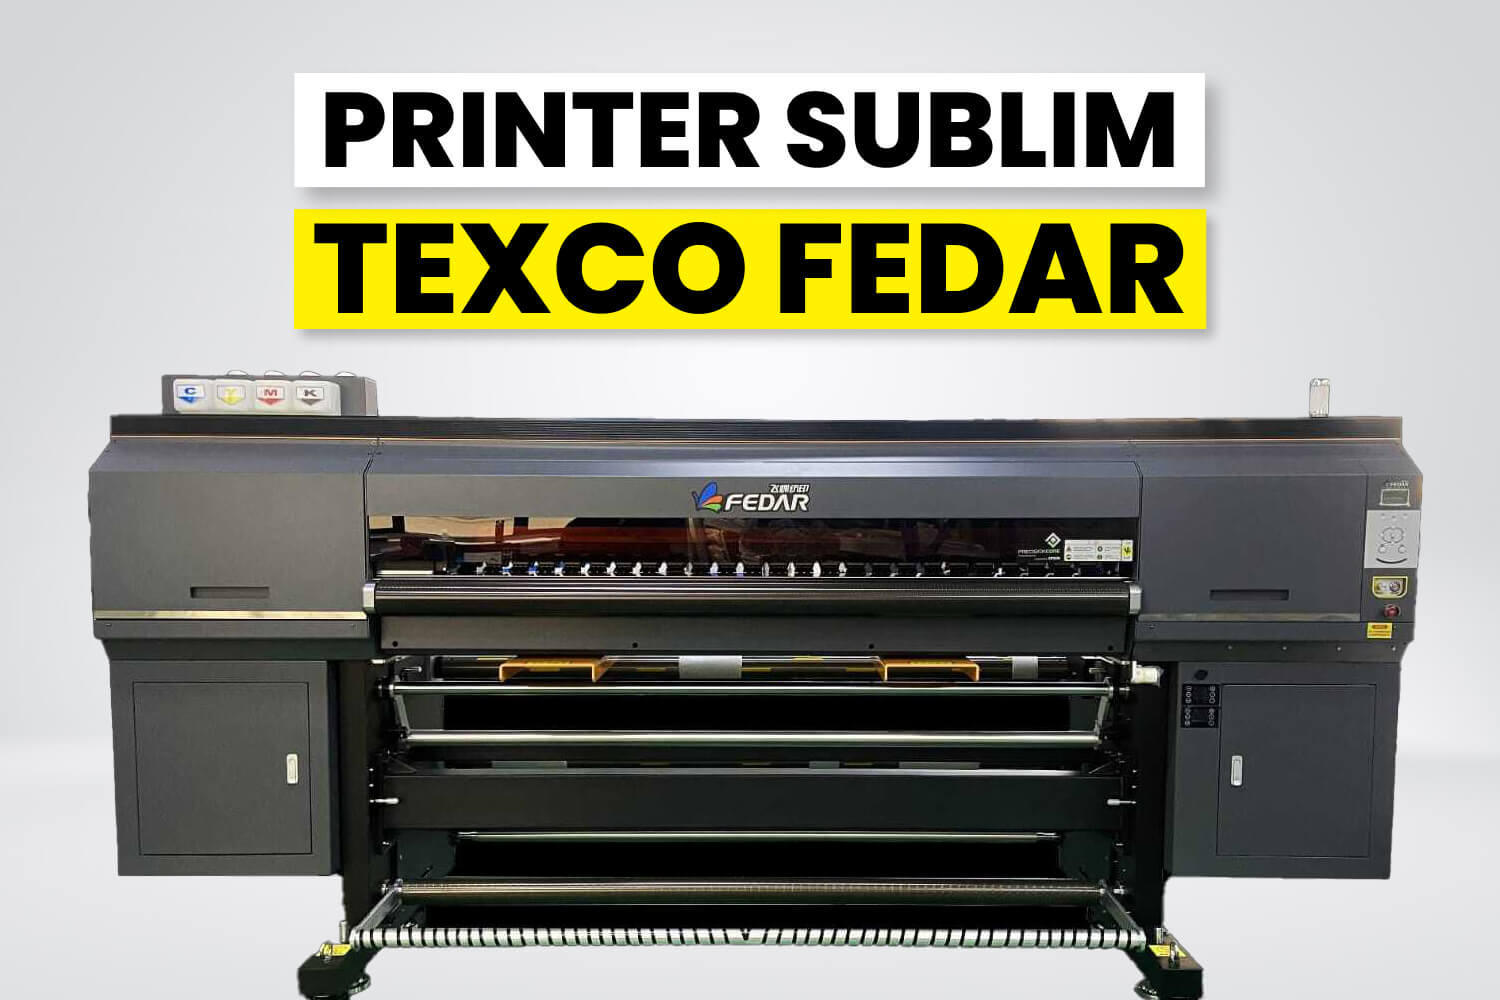 Printer Sublim Texco Fedar